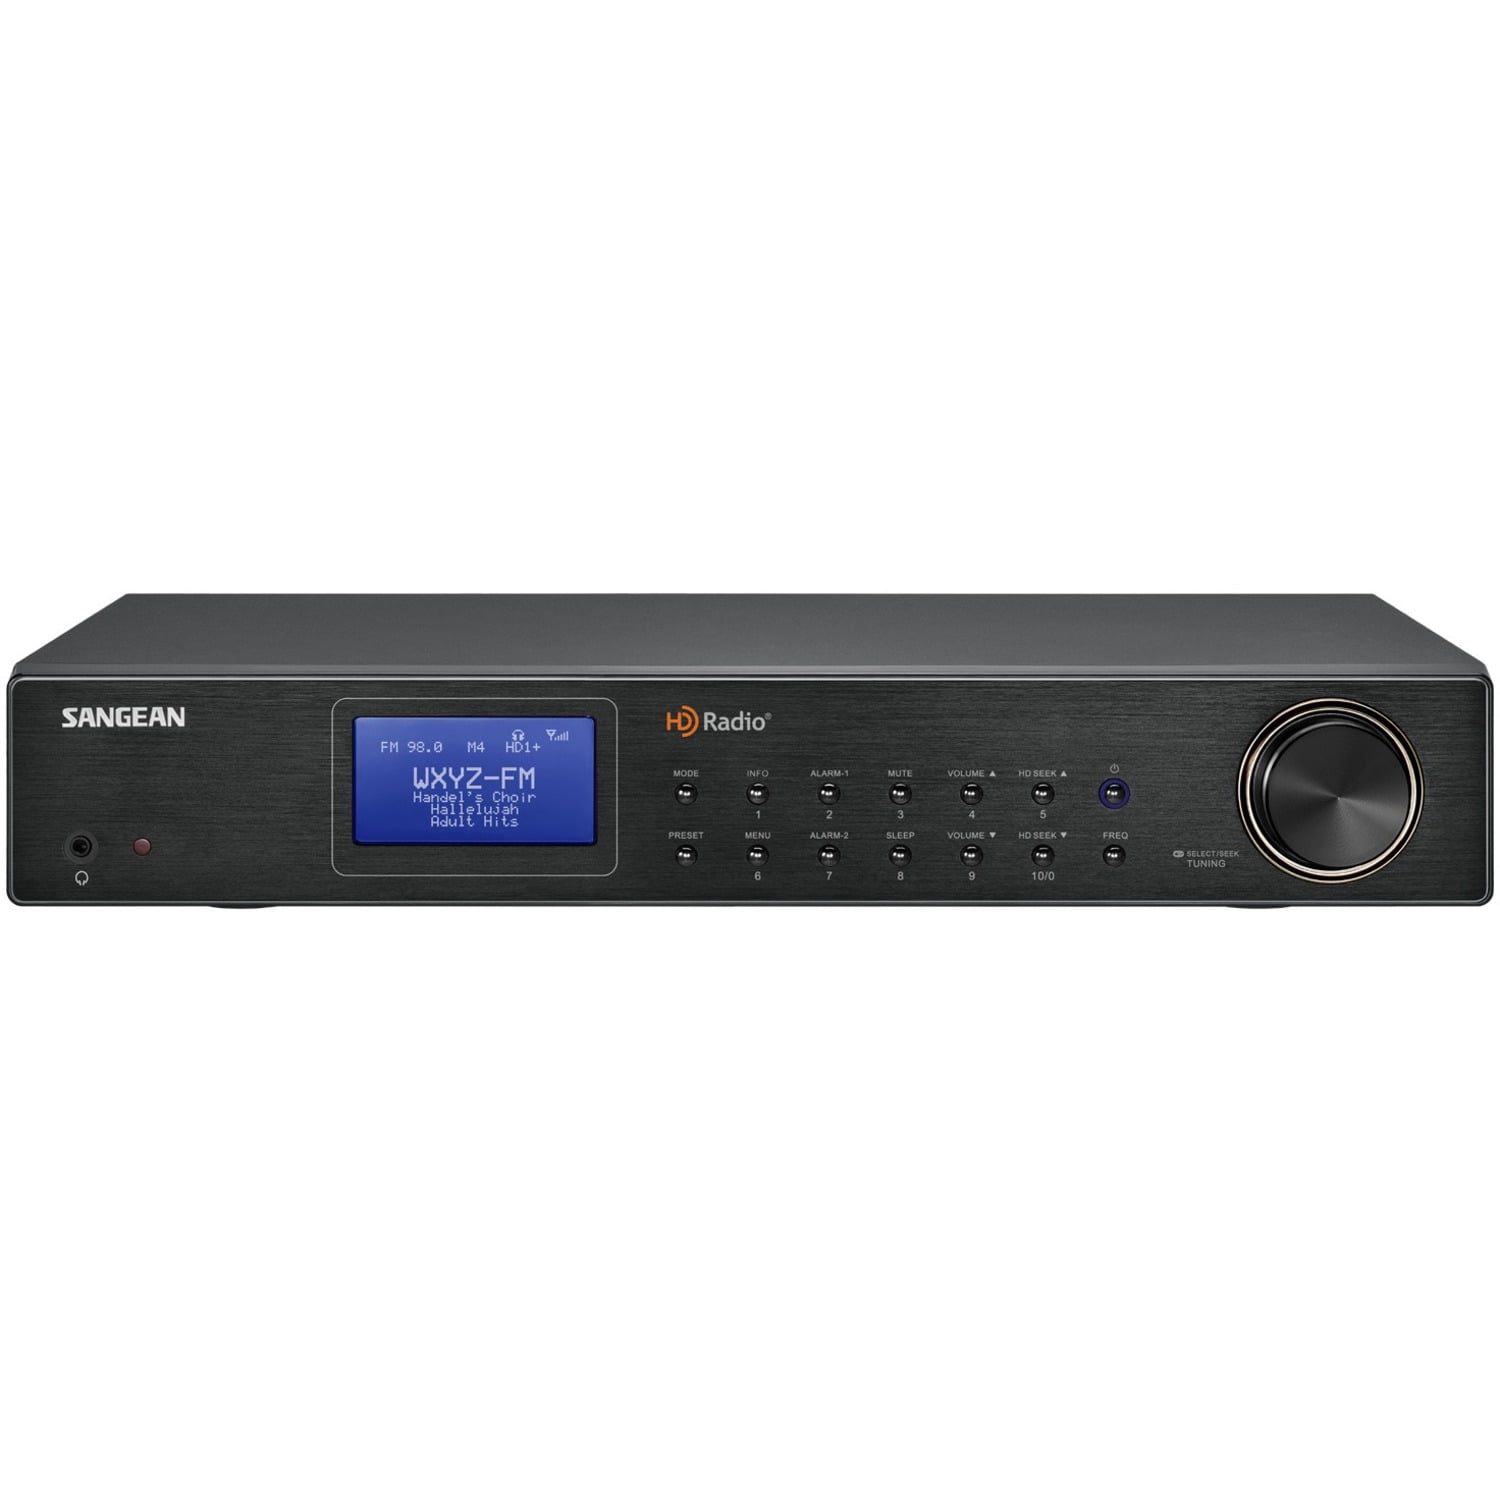 Sangean HDT-20 HD Radio/FM-Stereo/AM Component Tuner Certified Refurbished 